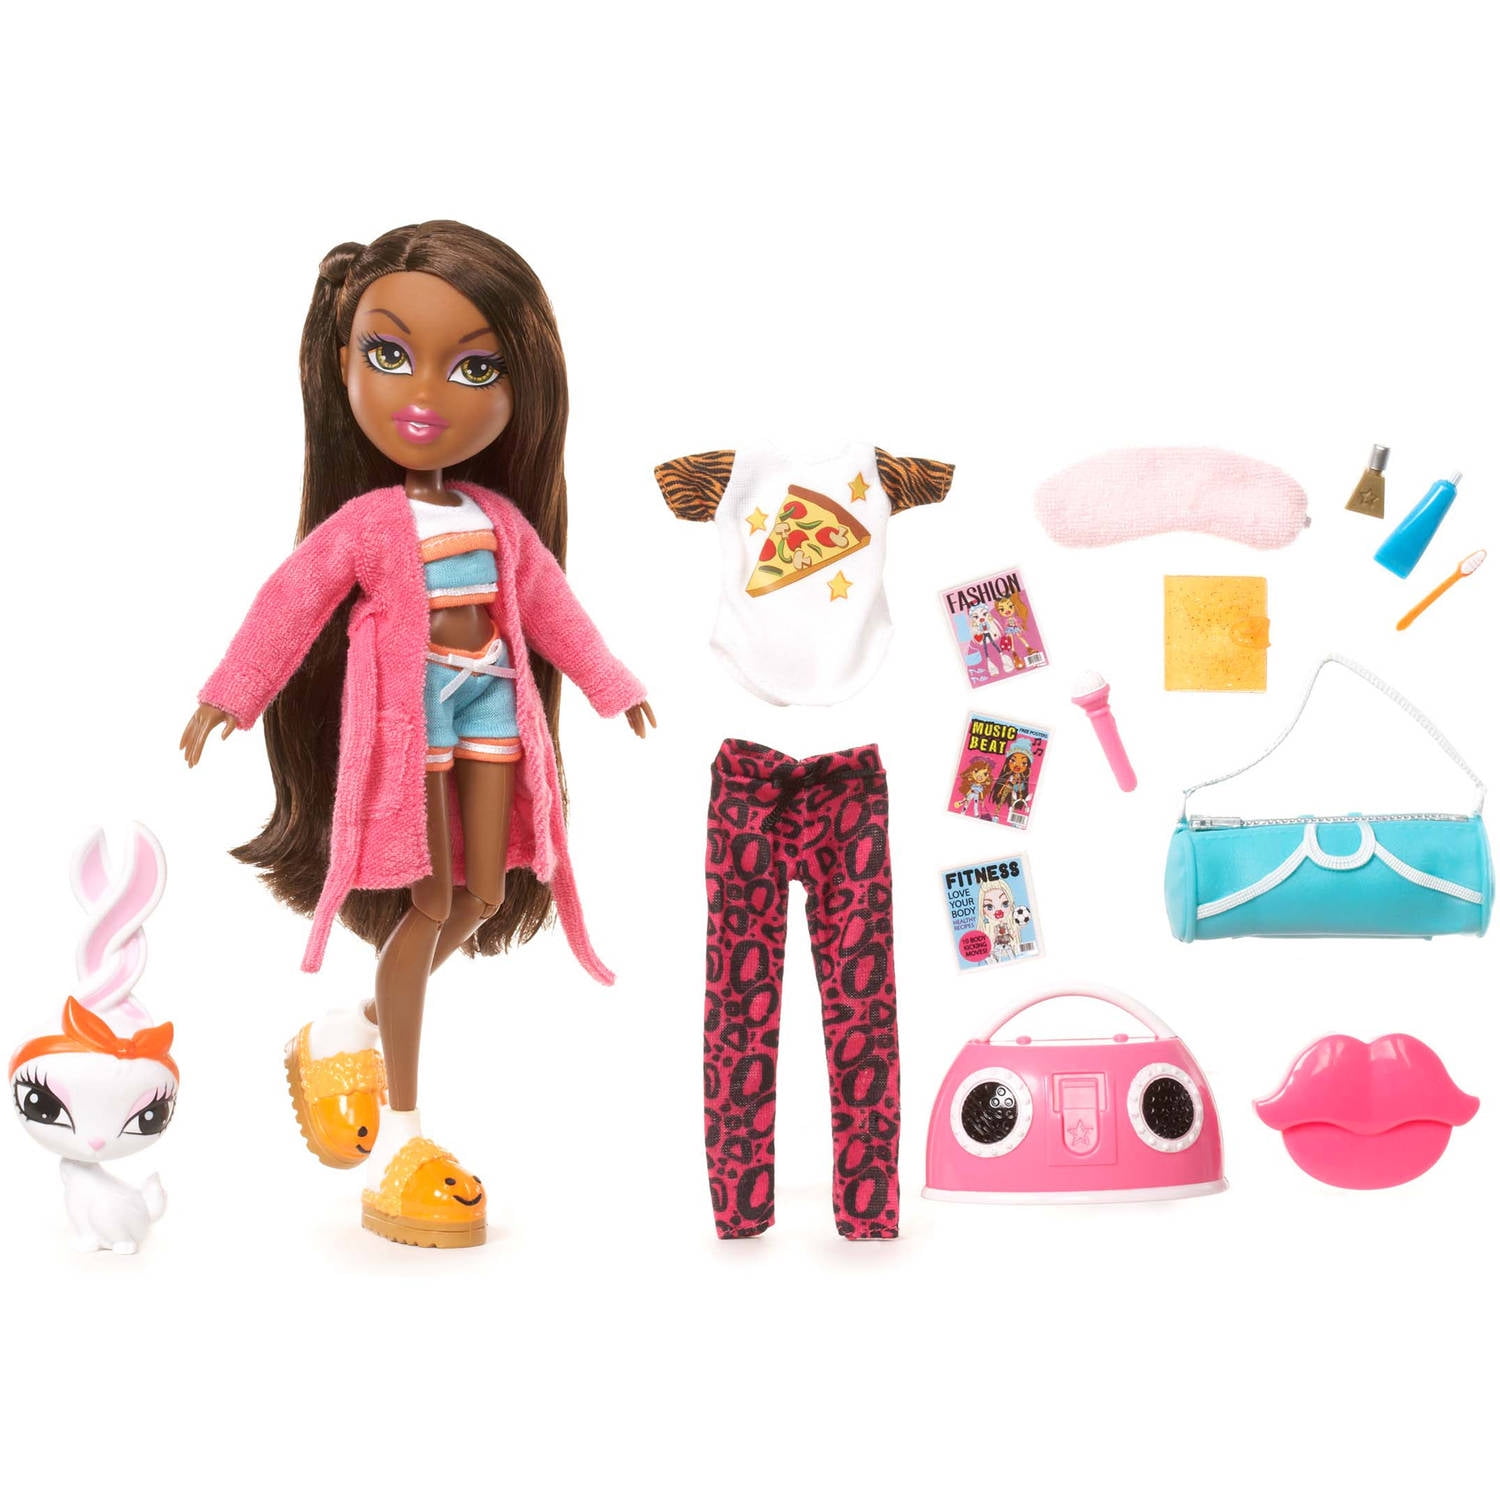 Bratz Sleepover Party Doll, Sasha, Great Gift for Children Ages 6